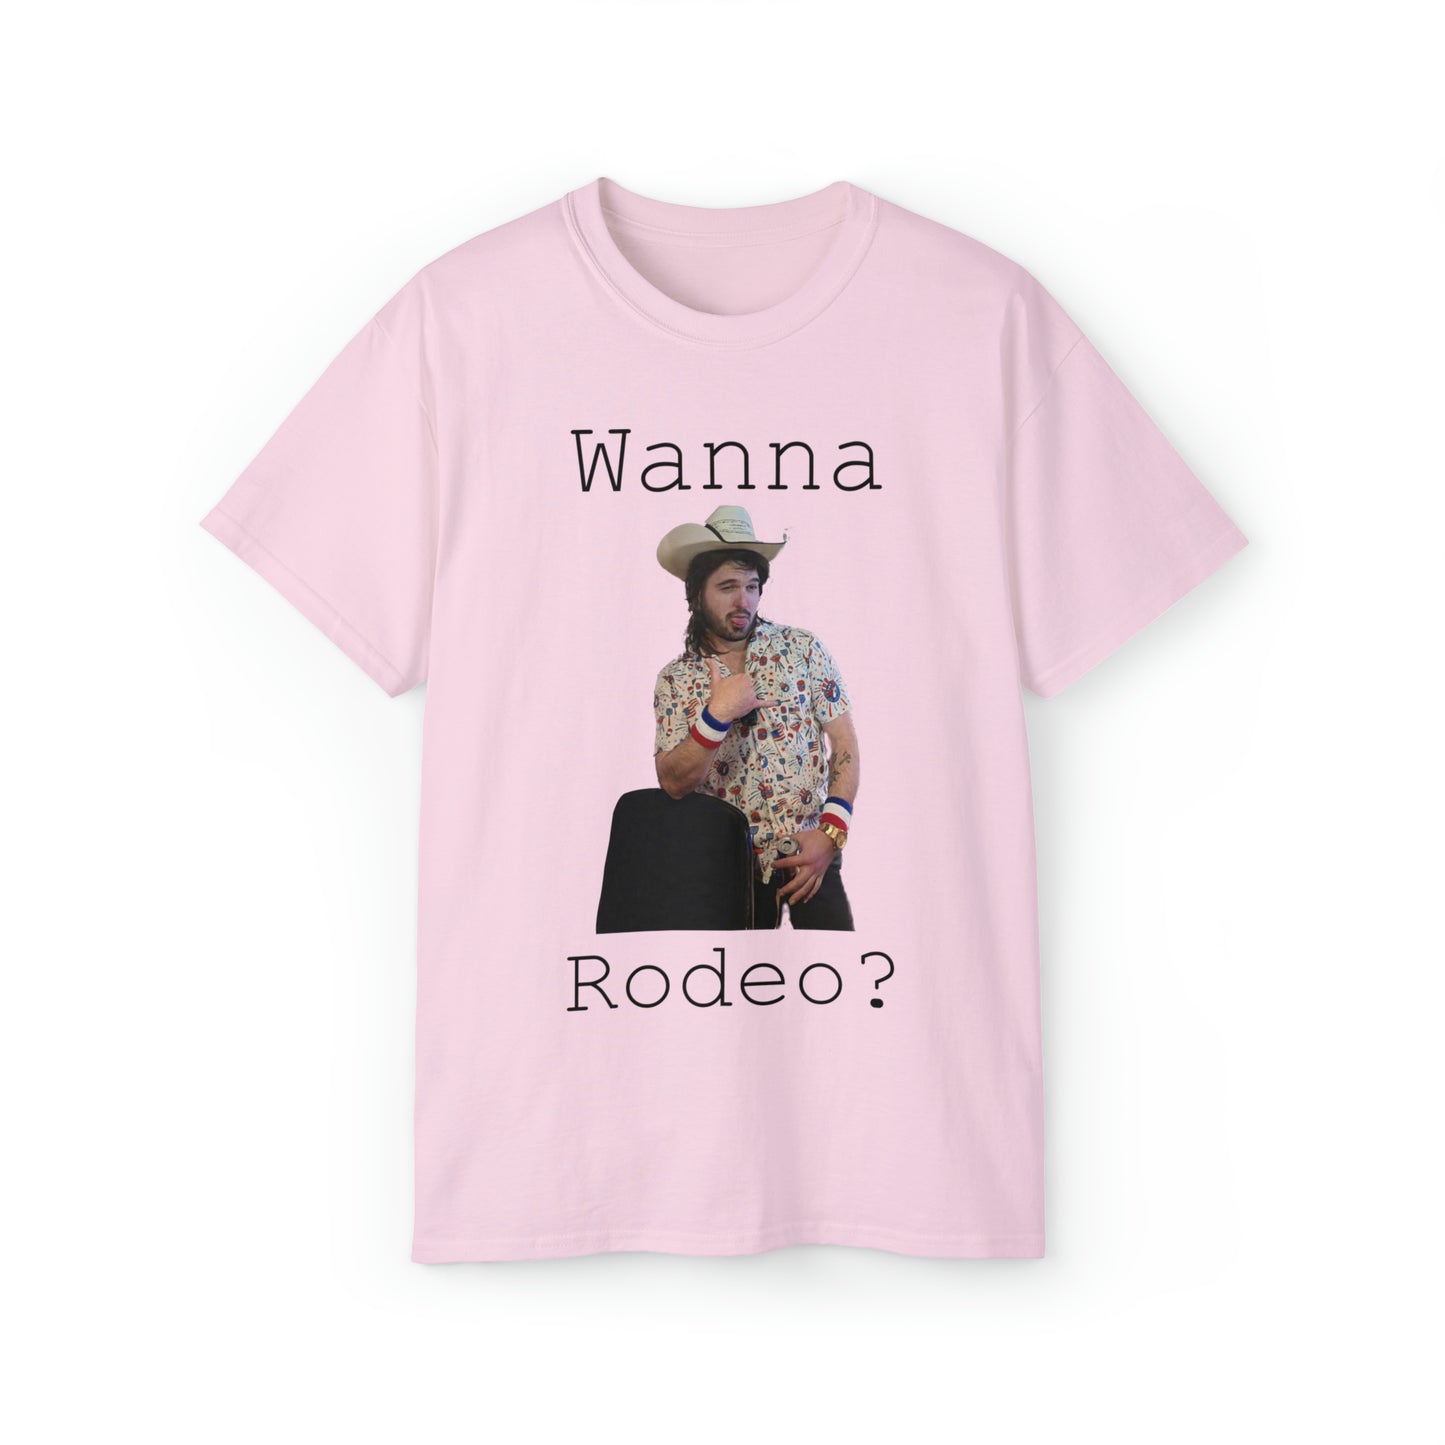 Wanna Rodeo - Hurts Shirts Collection